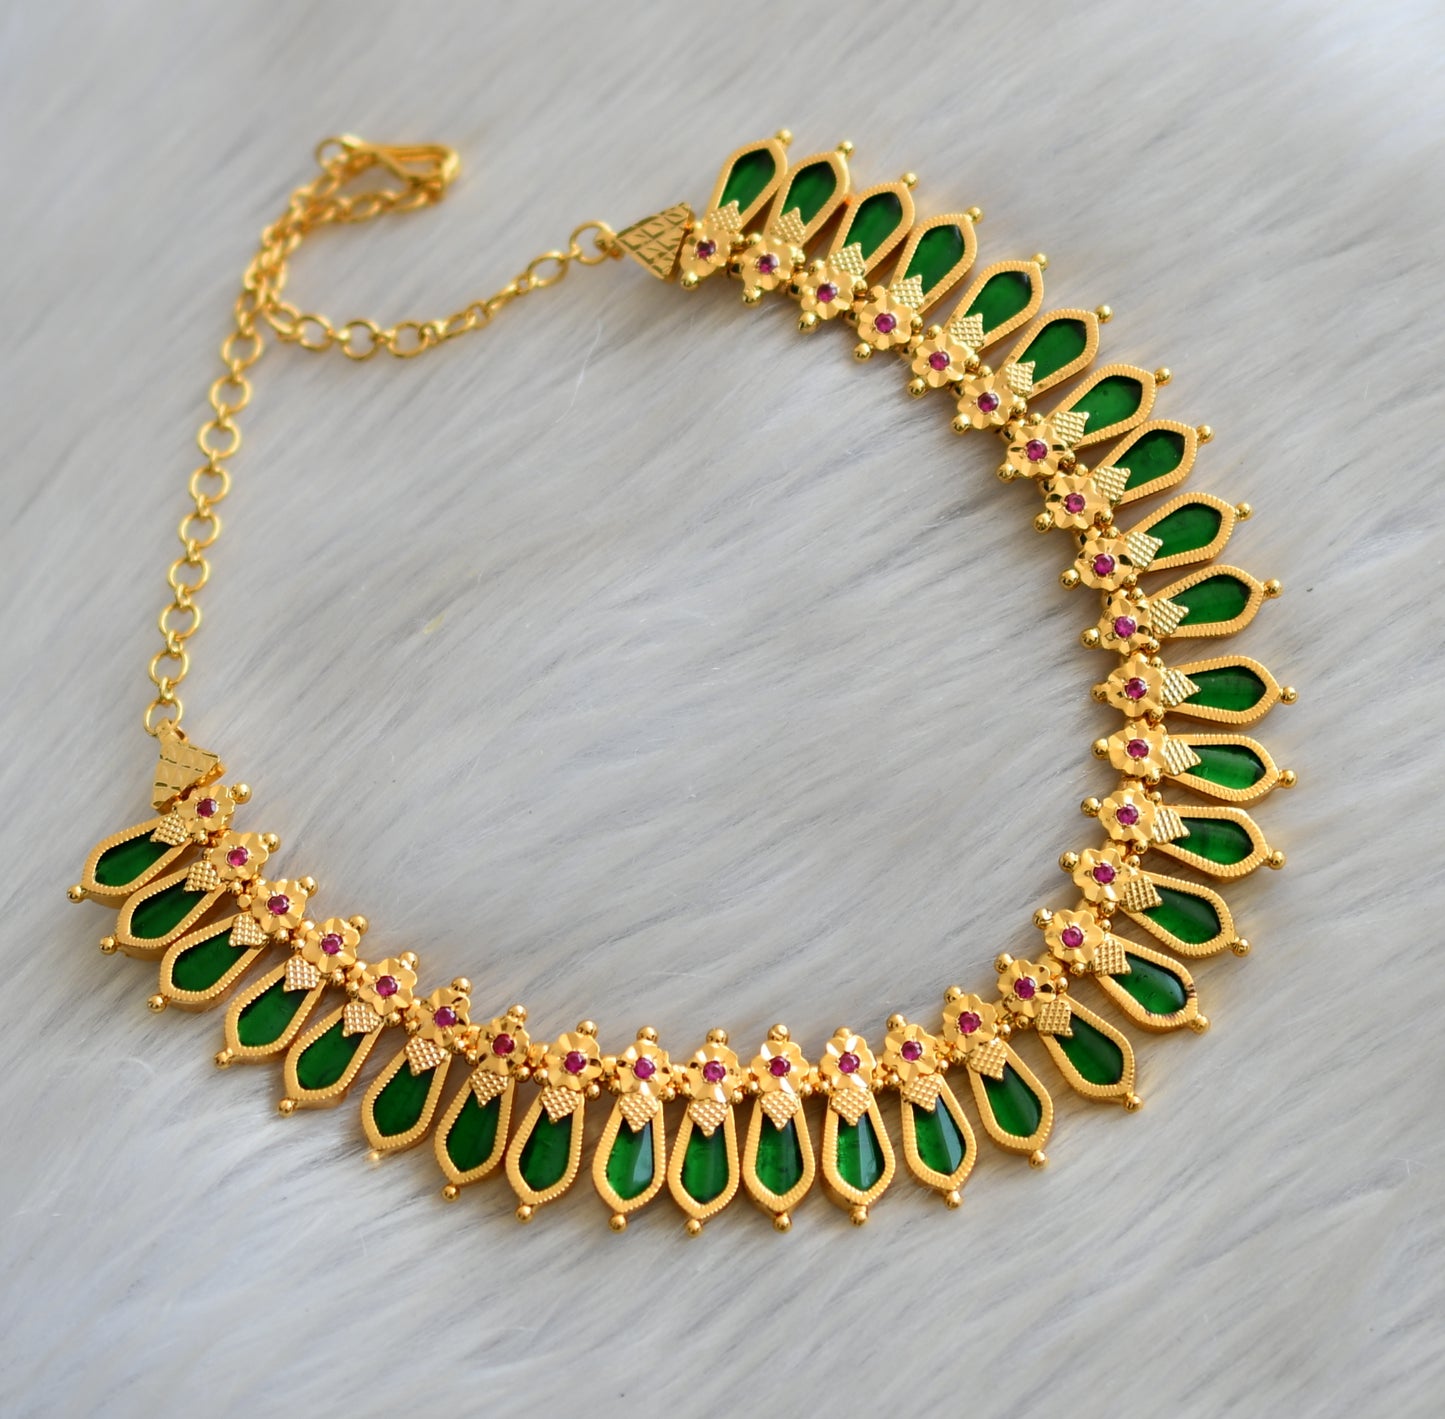 Gold look alike pink-green flower nagapadam necklace dj-33721